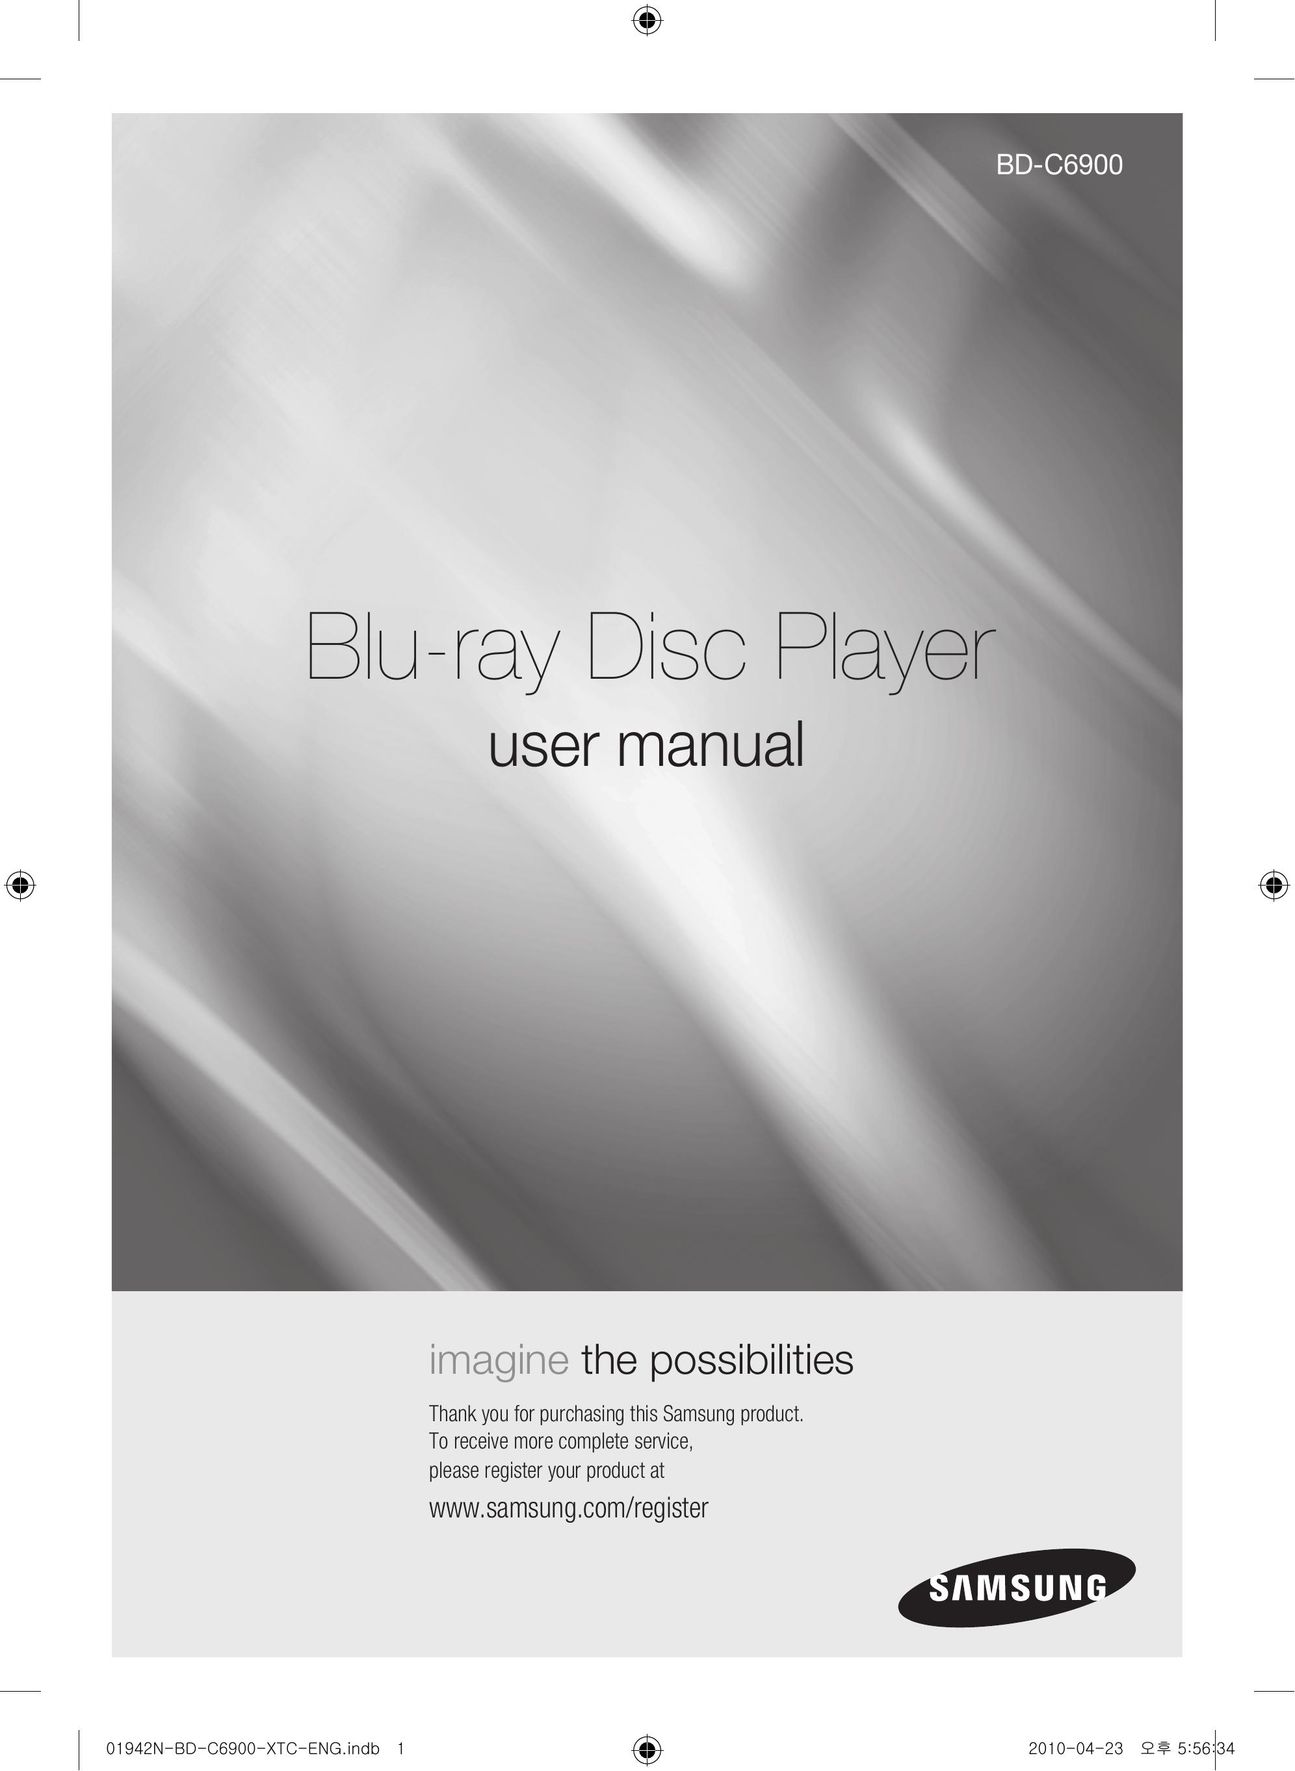 Samsung BD-C6900 Blu-ray Player User Manual